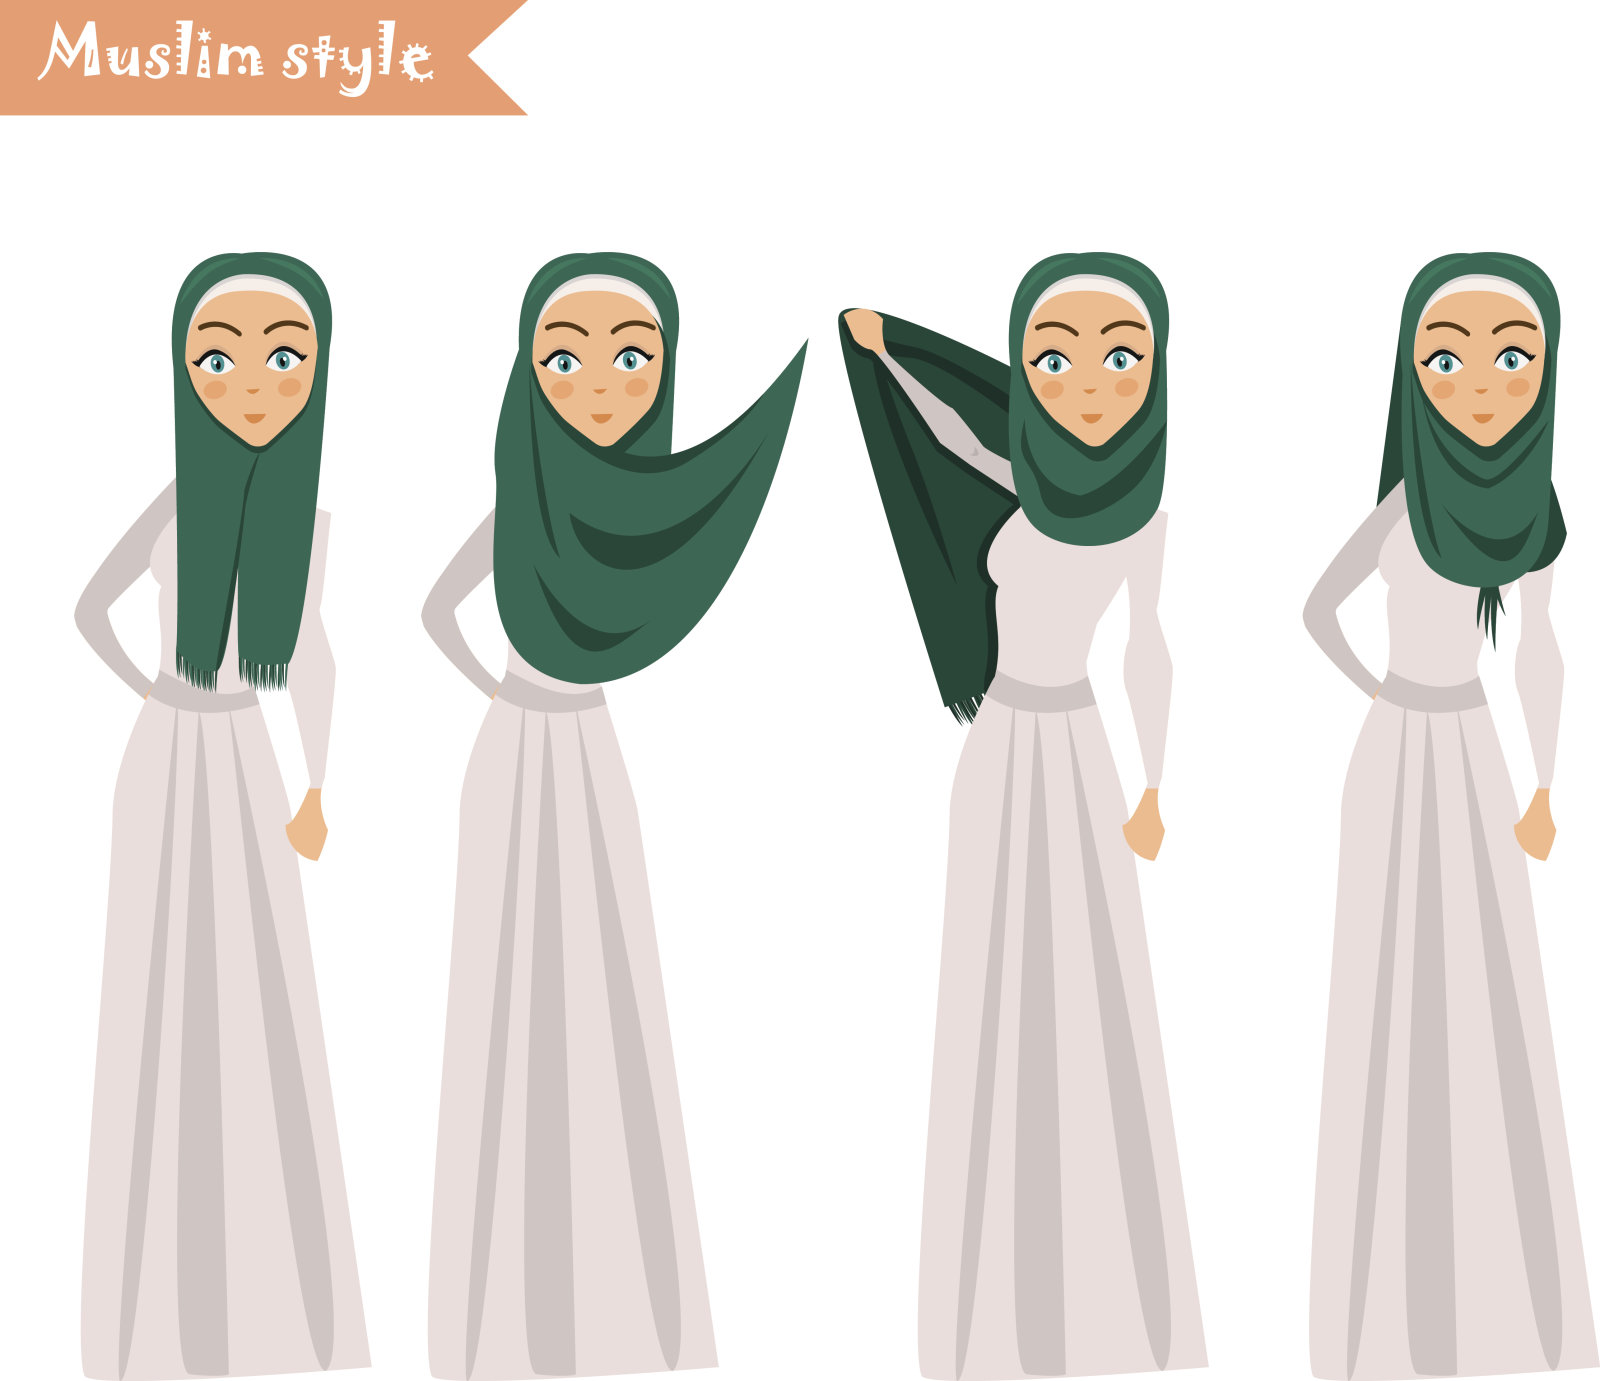 How to Put On a muslim Hijab